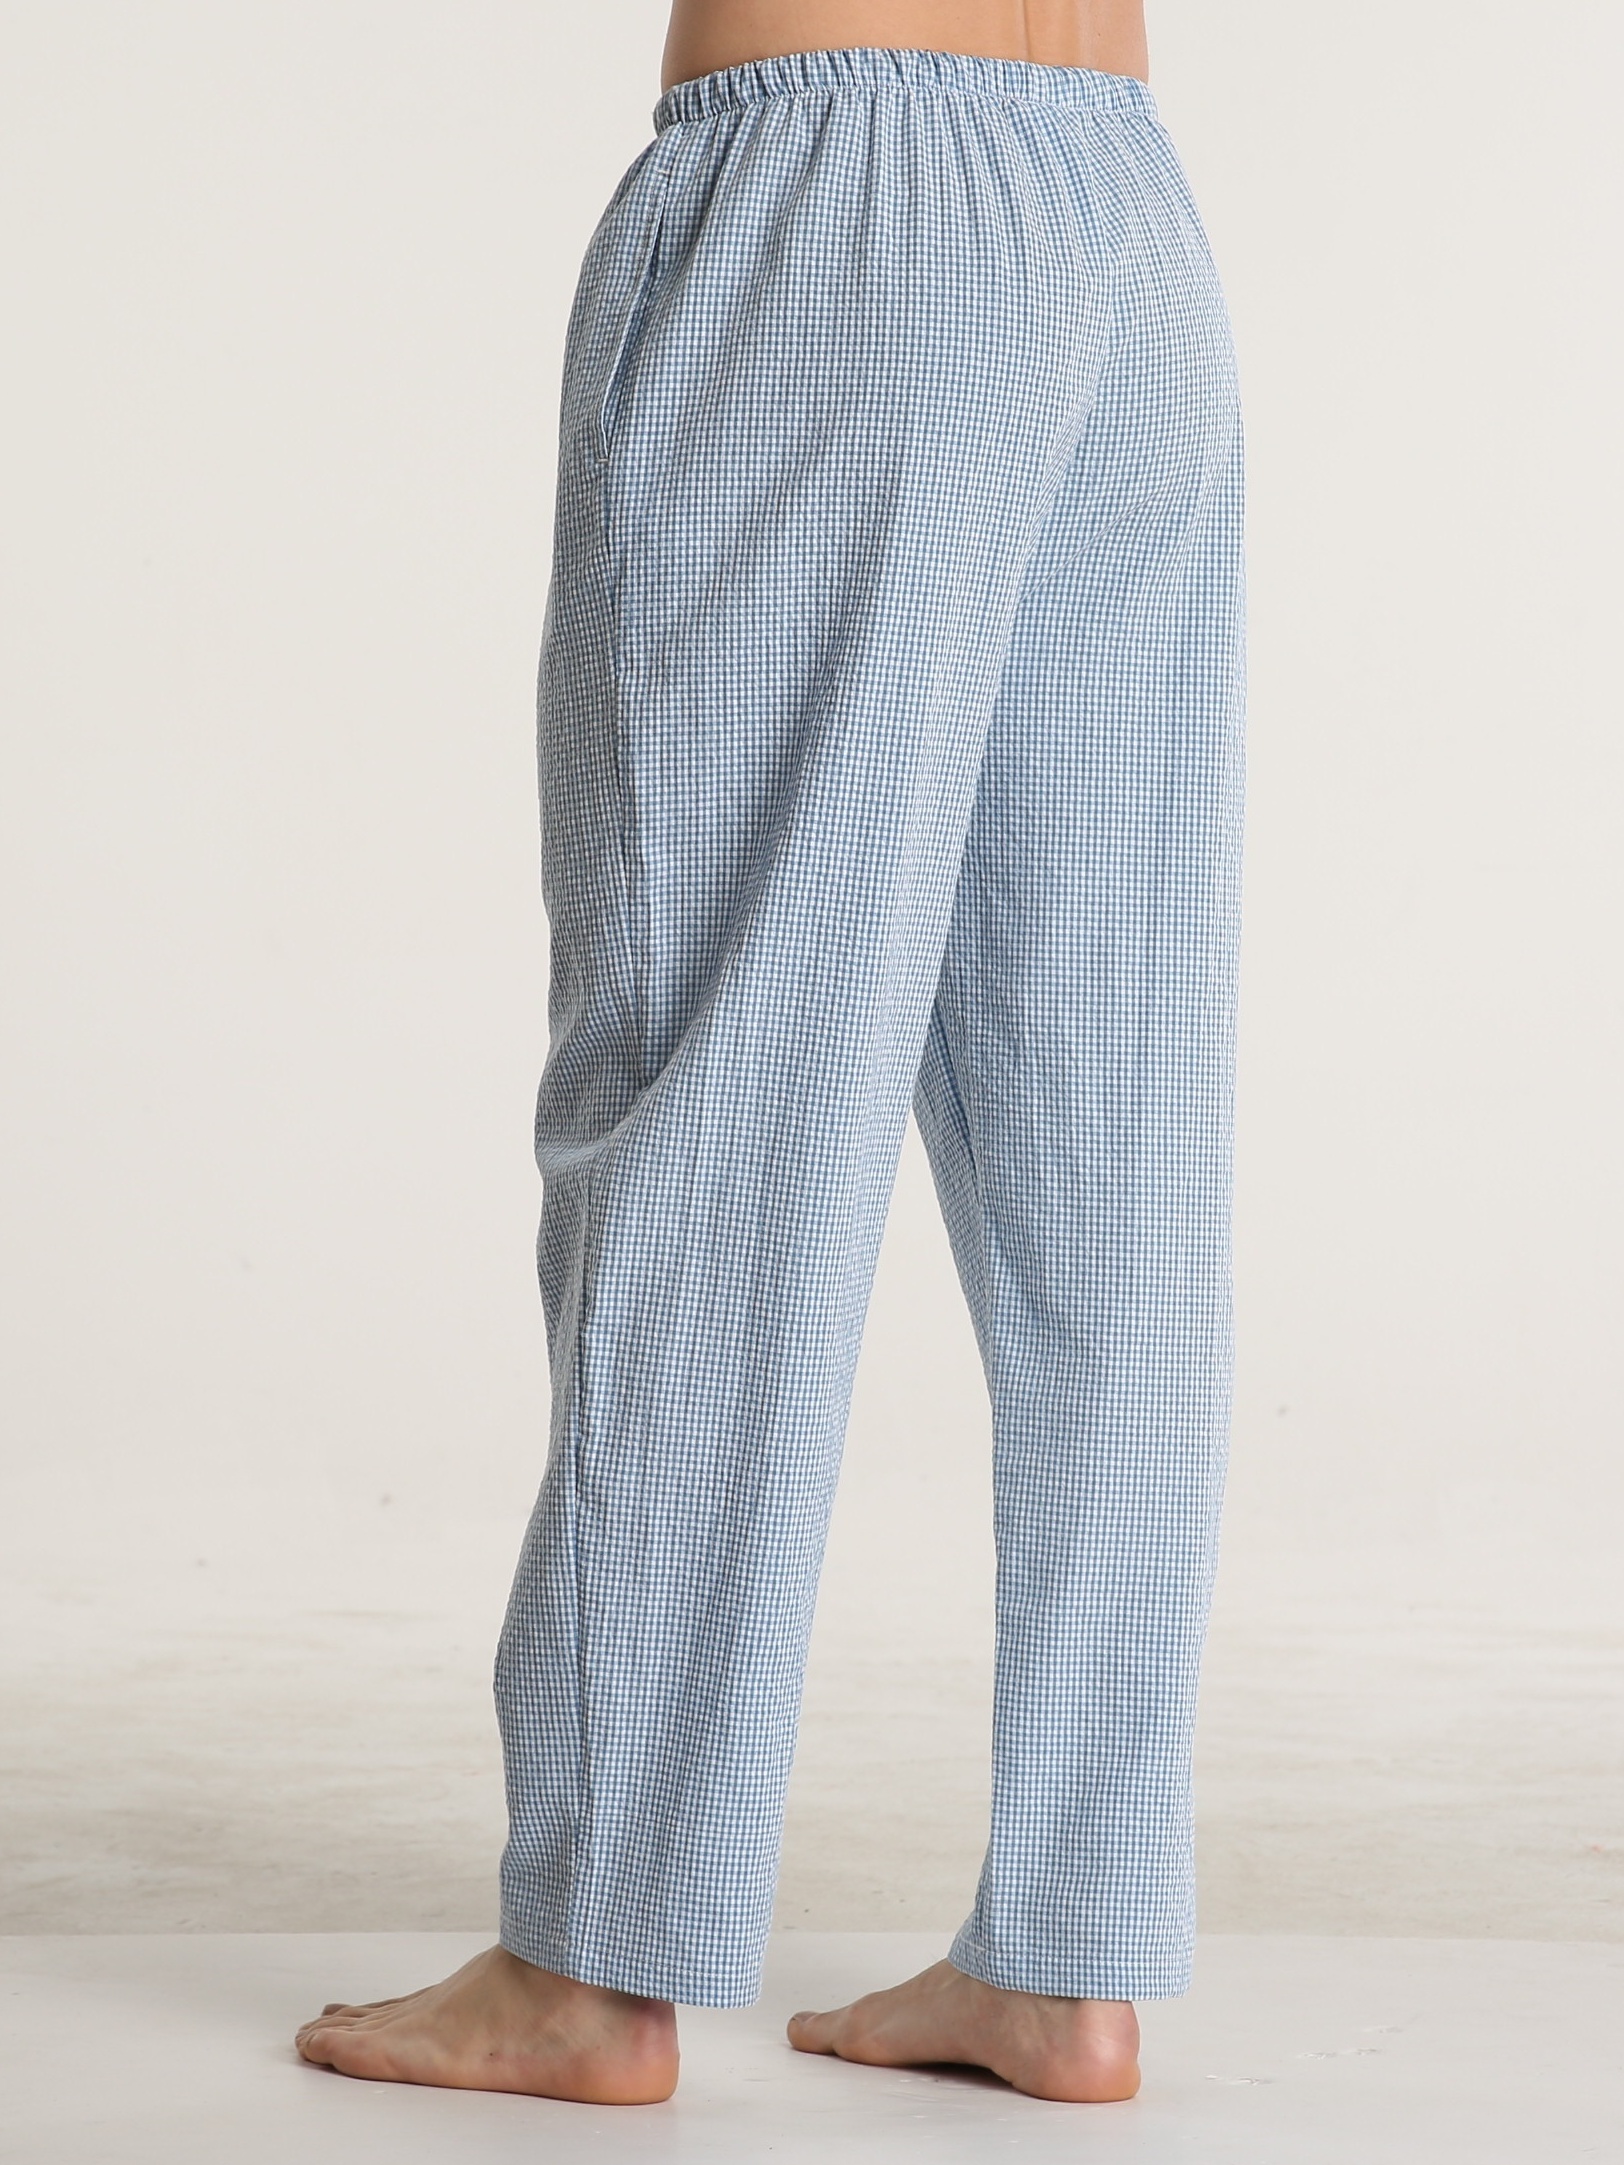 Mens Flannel Pajama Pants Lightweight Soft Plaid Lounge Sleep Bottoms, 2  Pockets | eBay